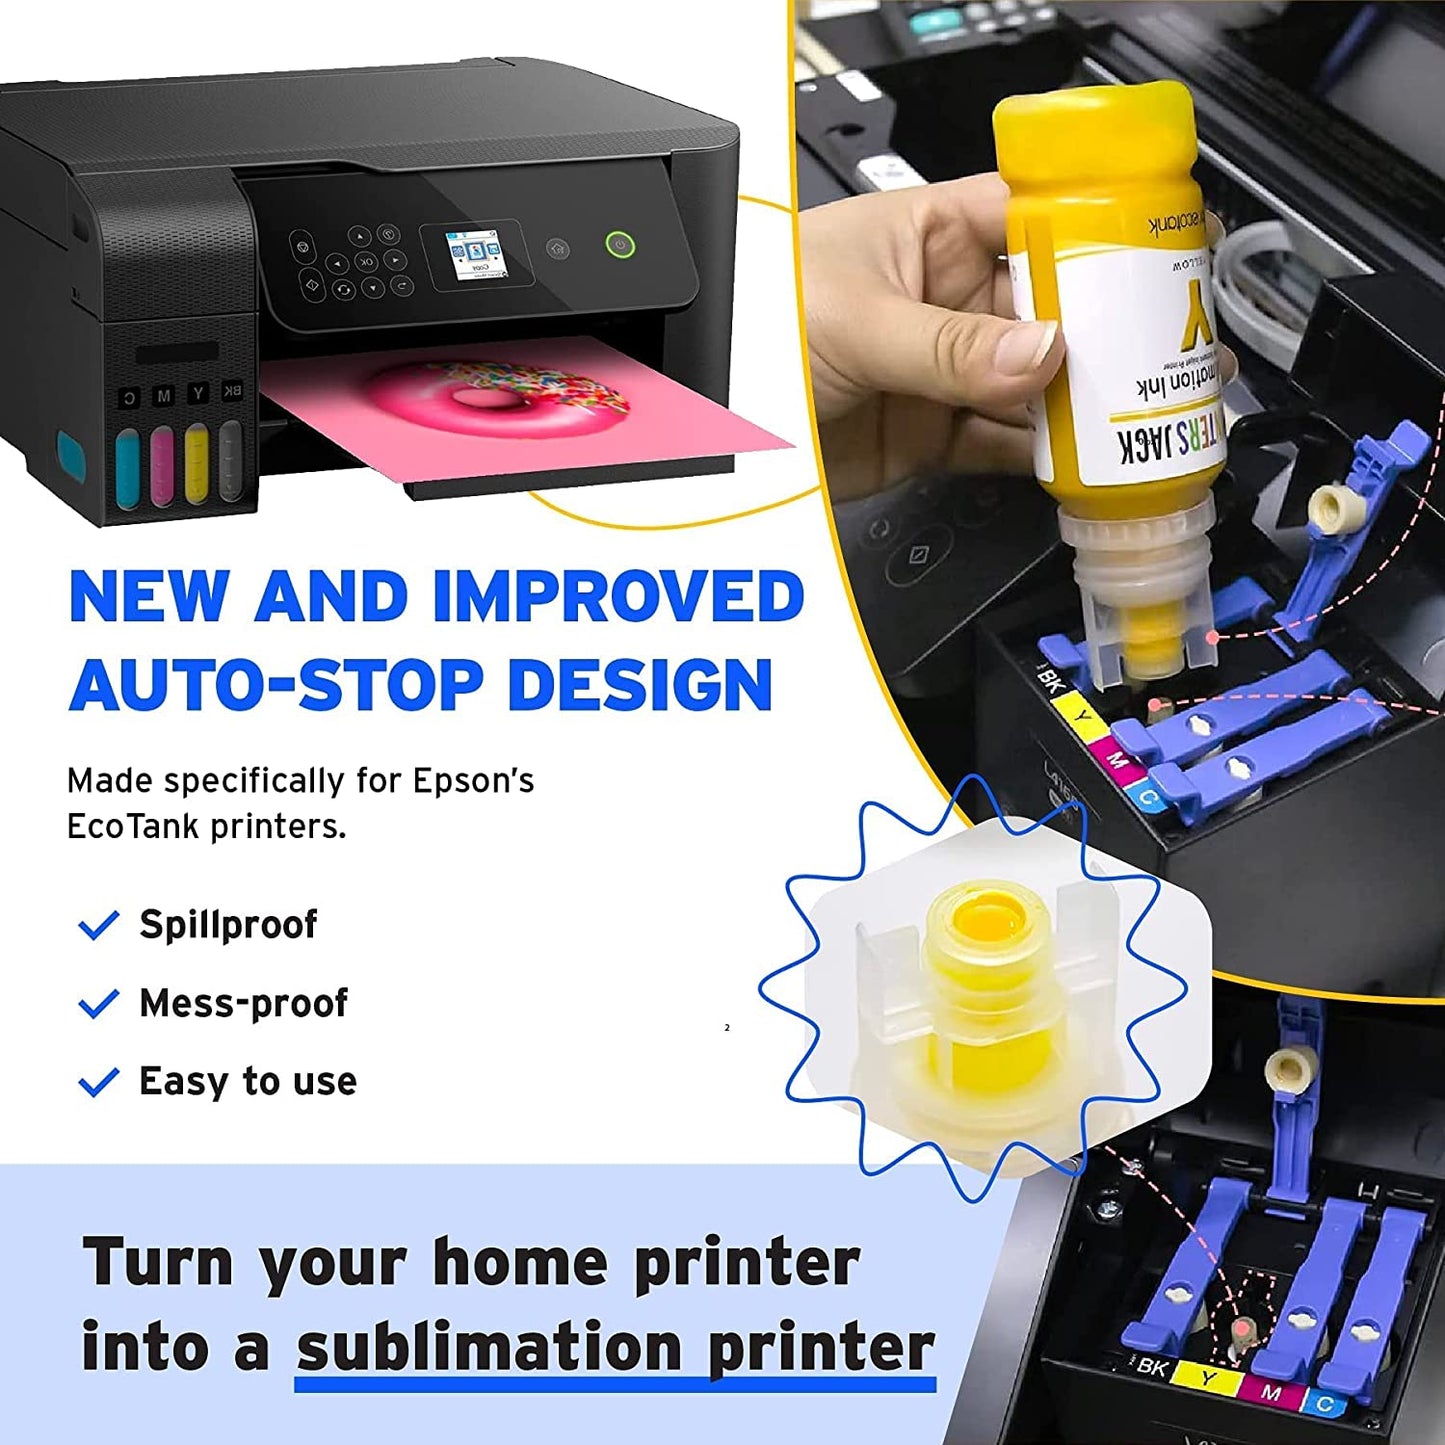 Printers Jack Sublimation Ink -  Canada